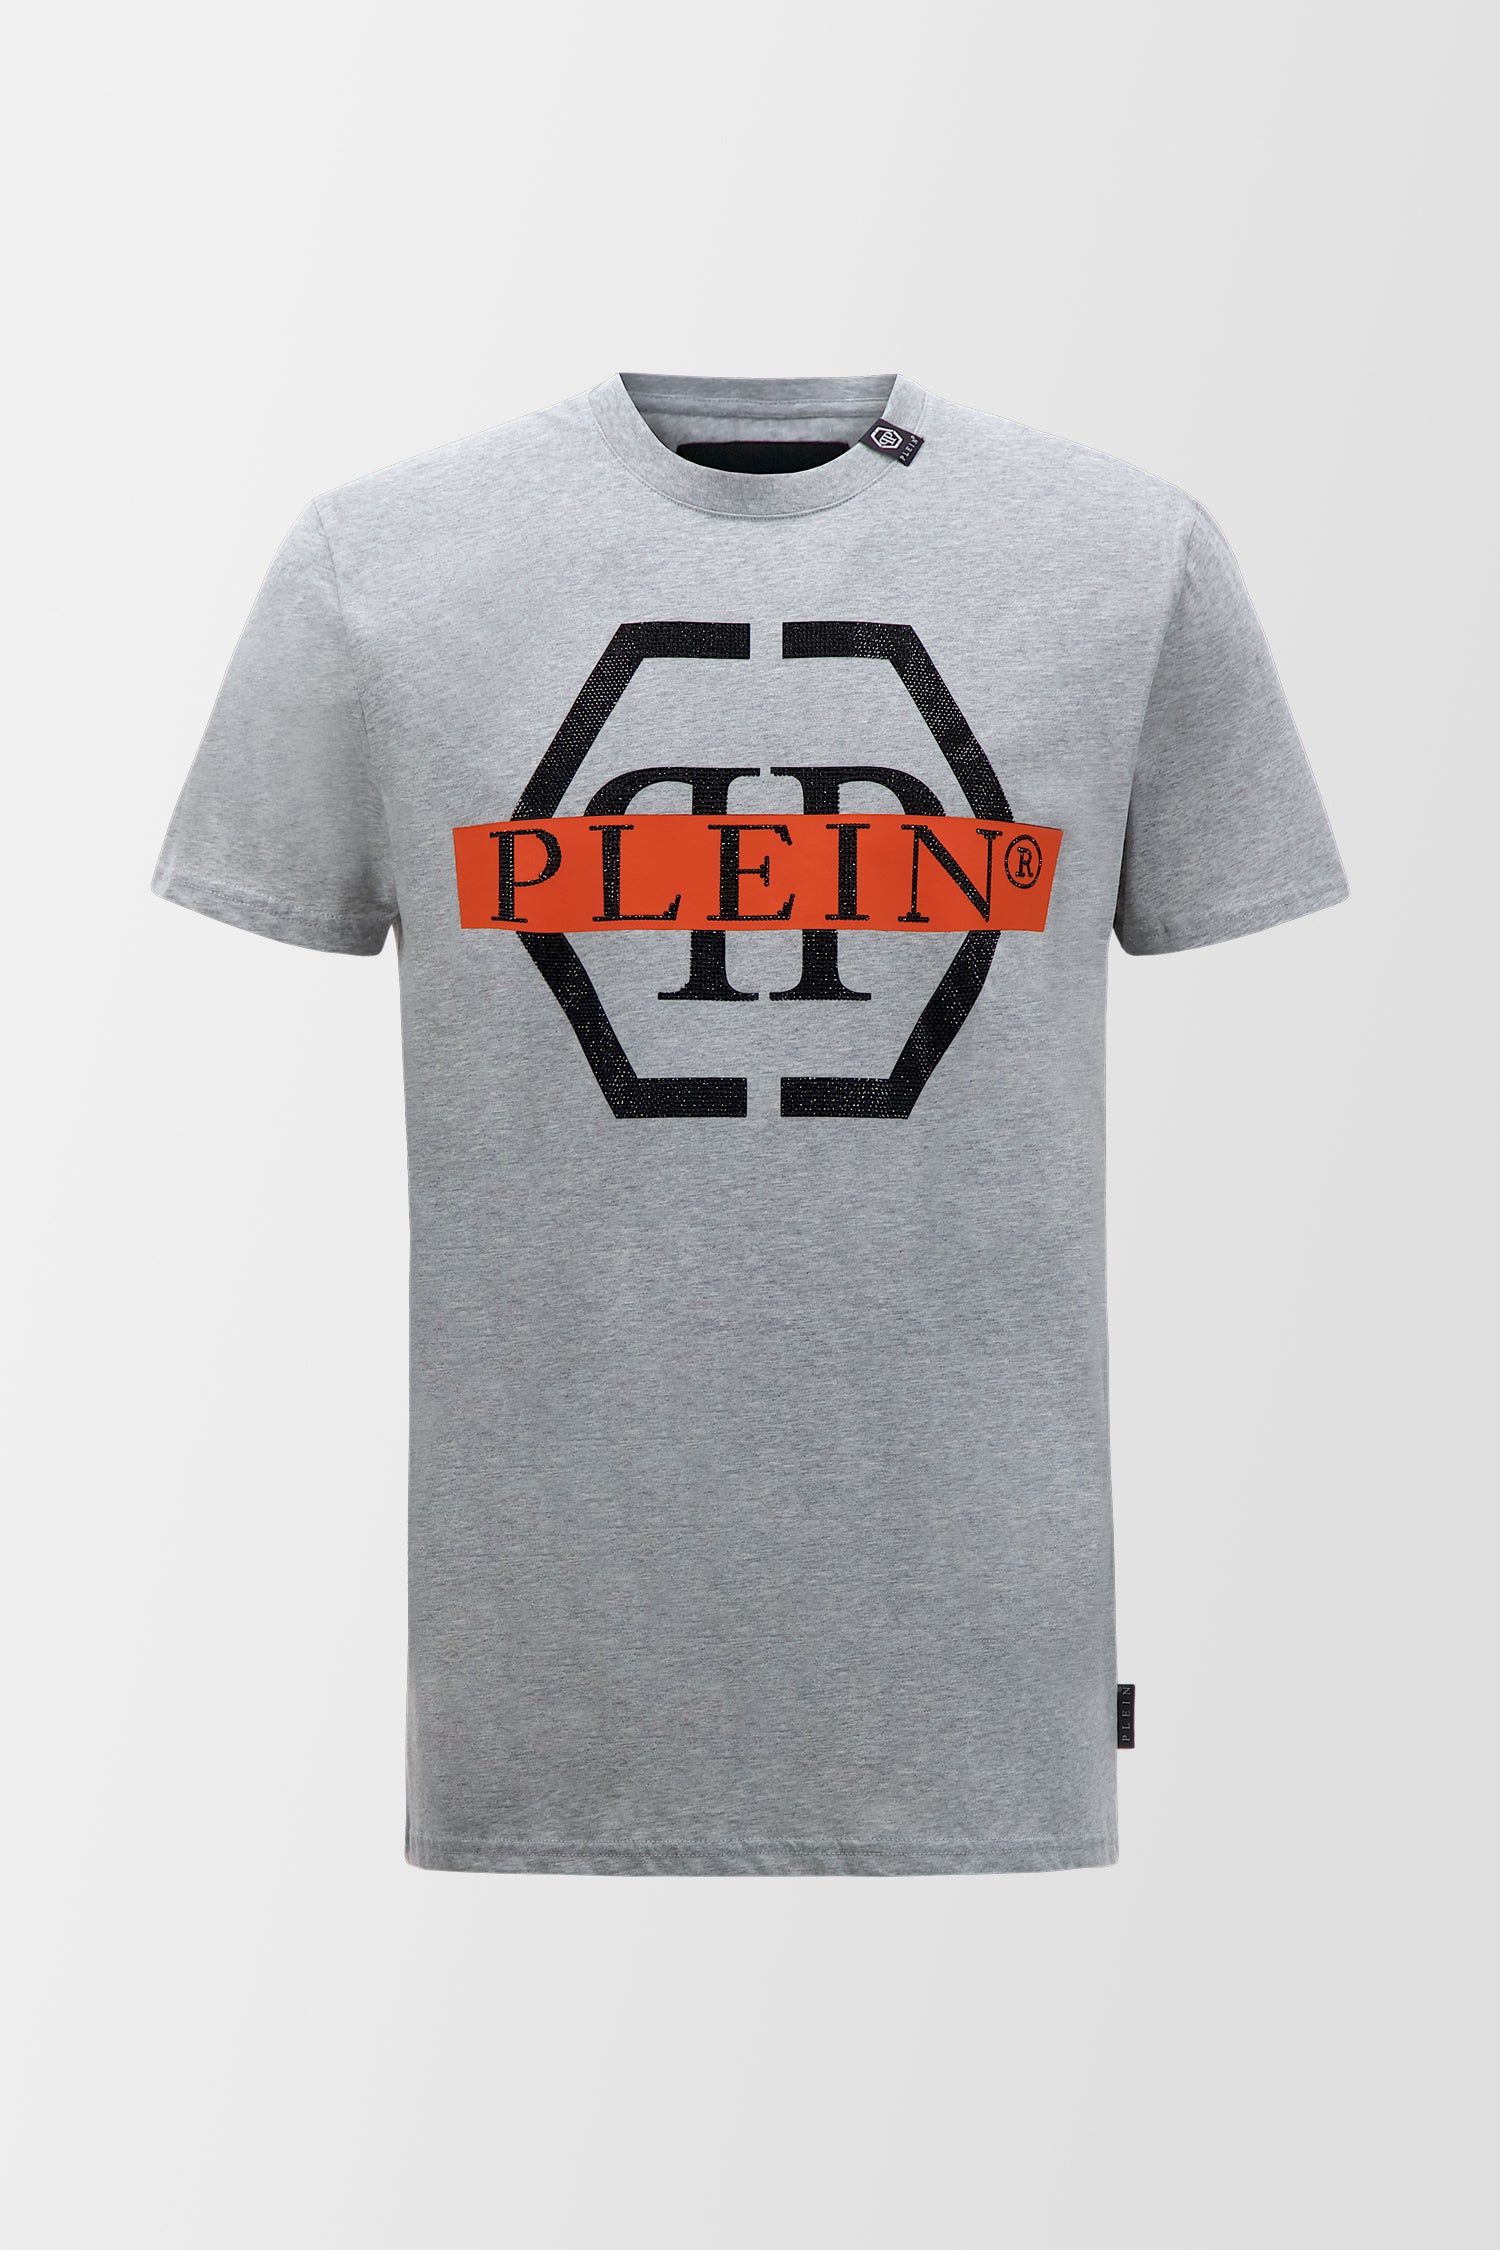 Philipp Plein Grey Hexagon T-Shirt